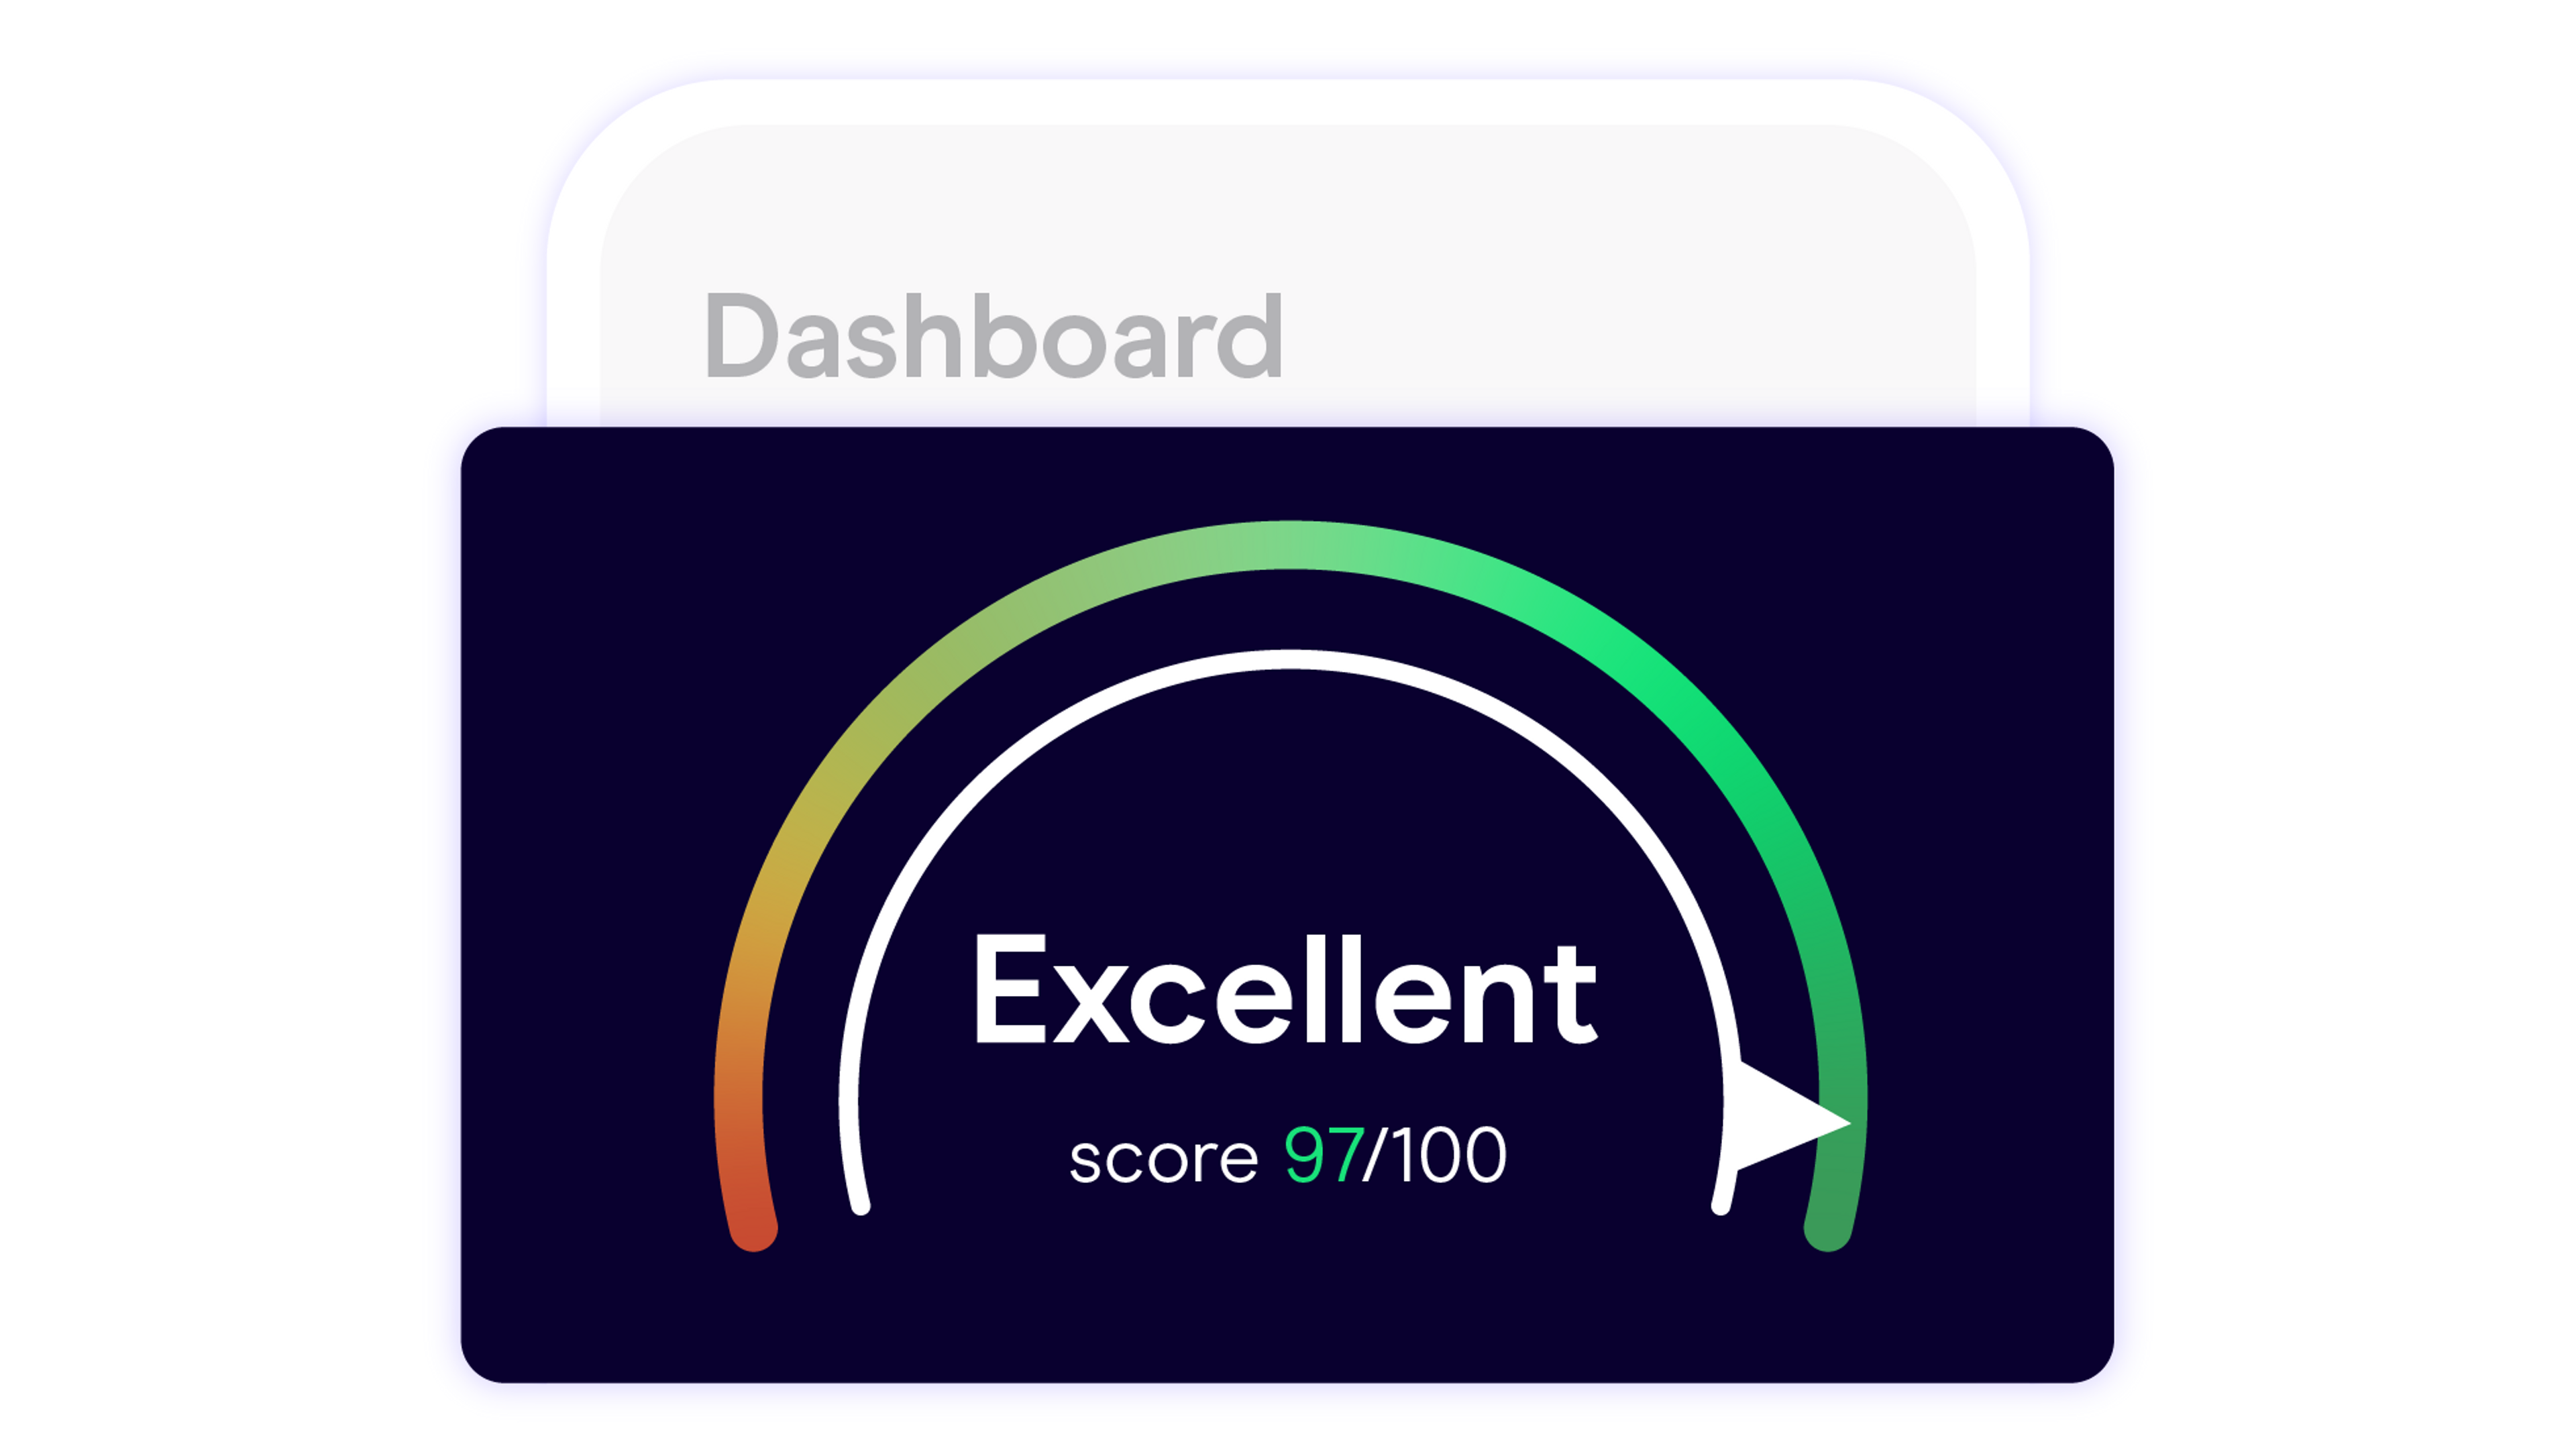 Zego Sense app driver score dashboard showing 'excellent'